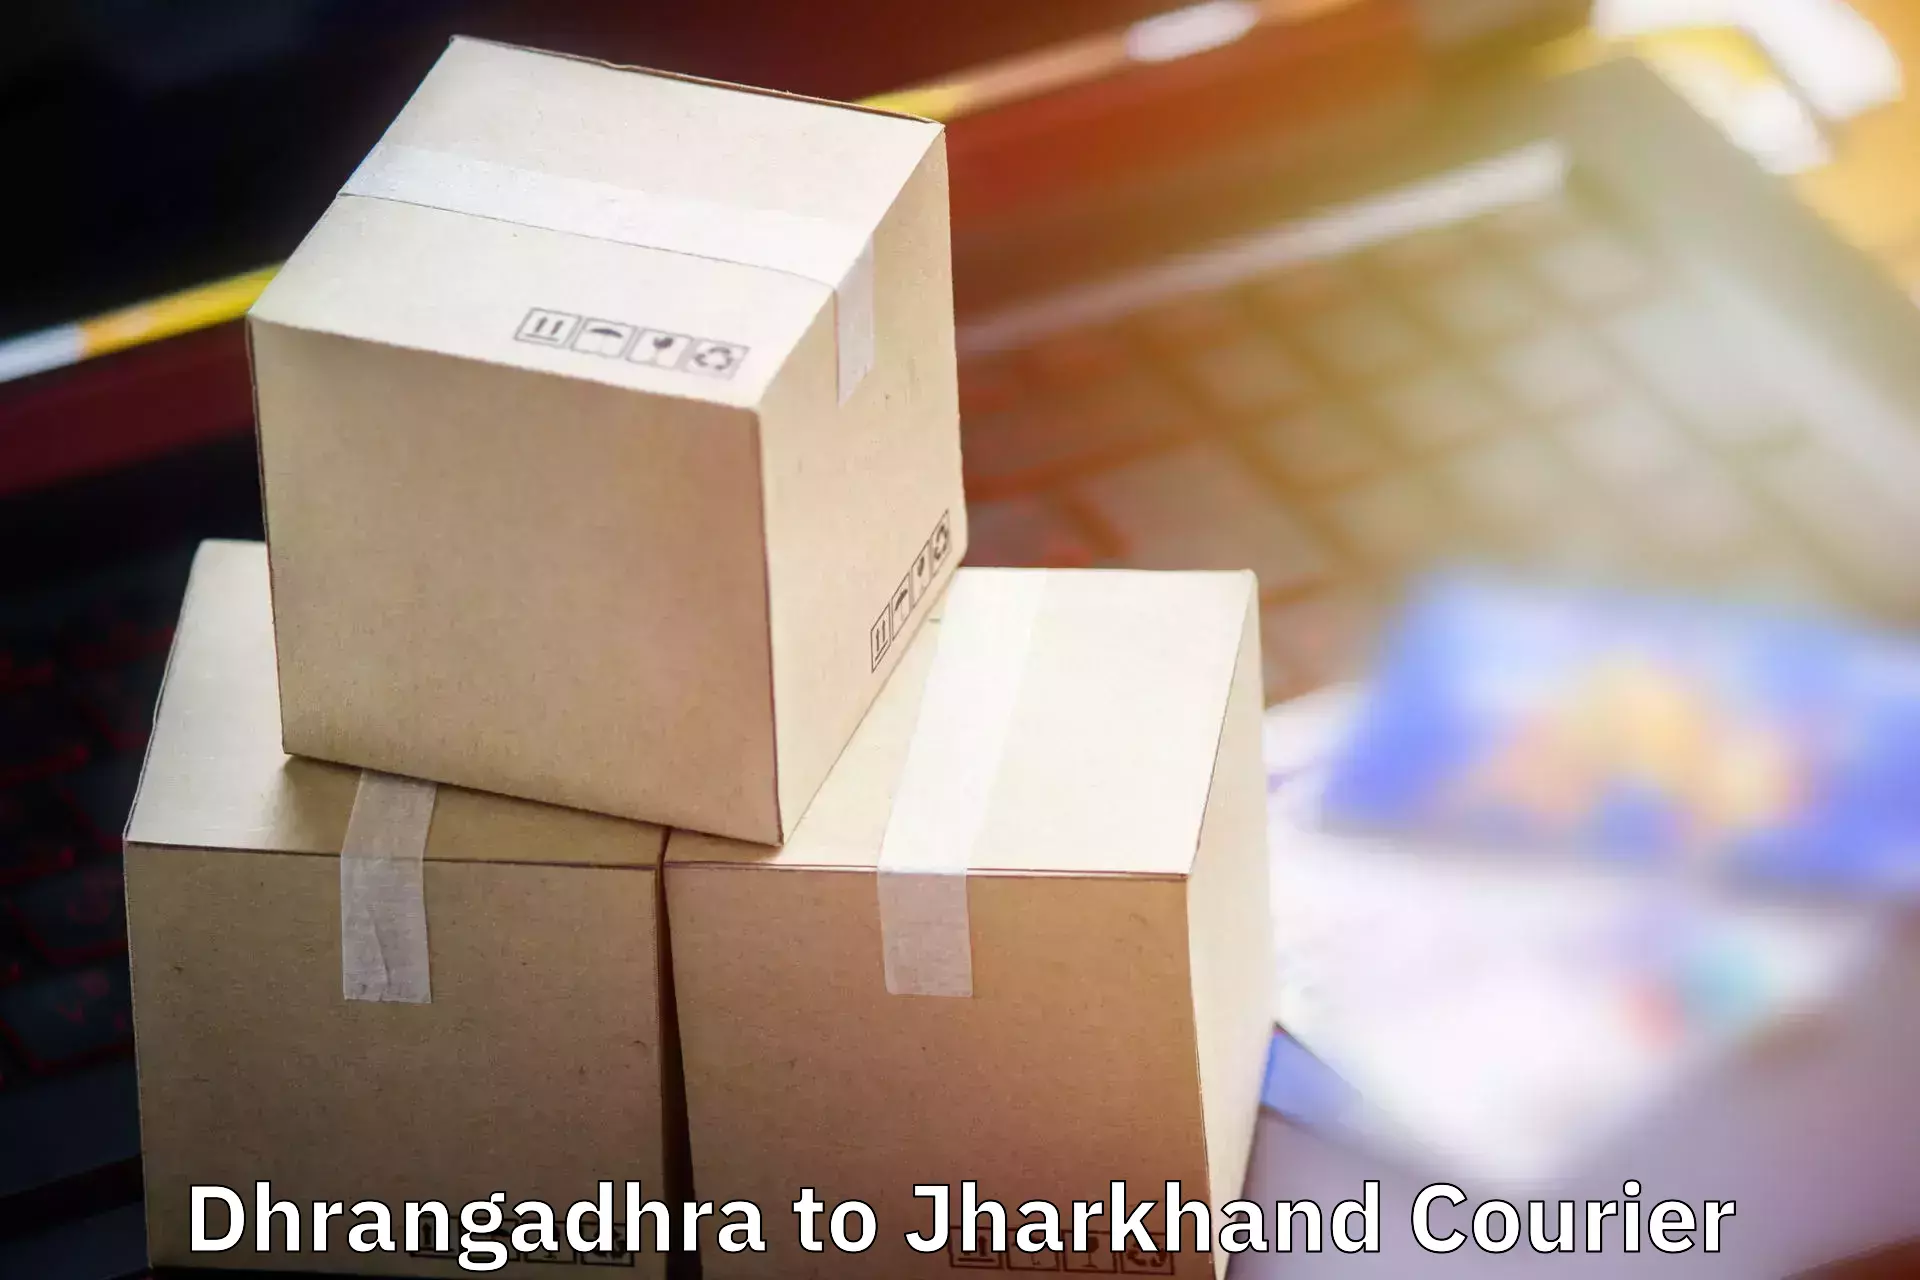 Urgent luggage shipment in Dhrangadhra to Domchanch